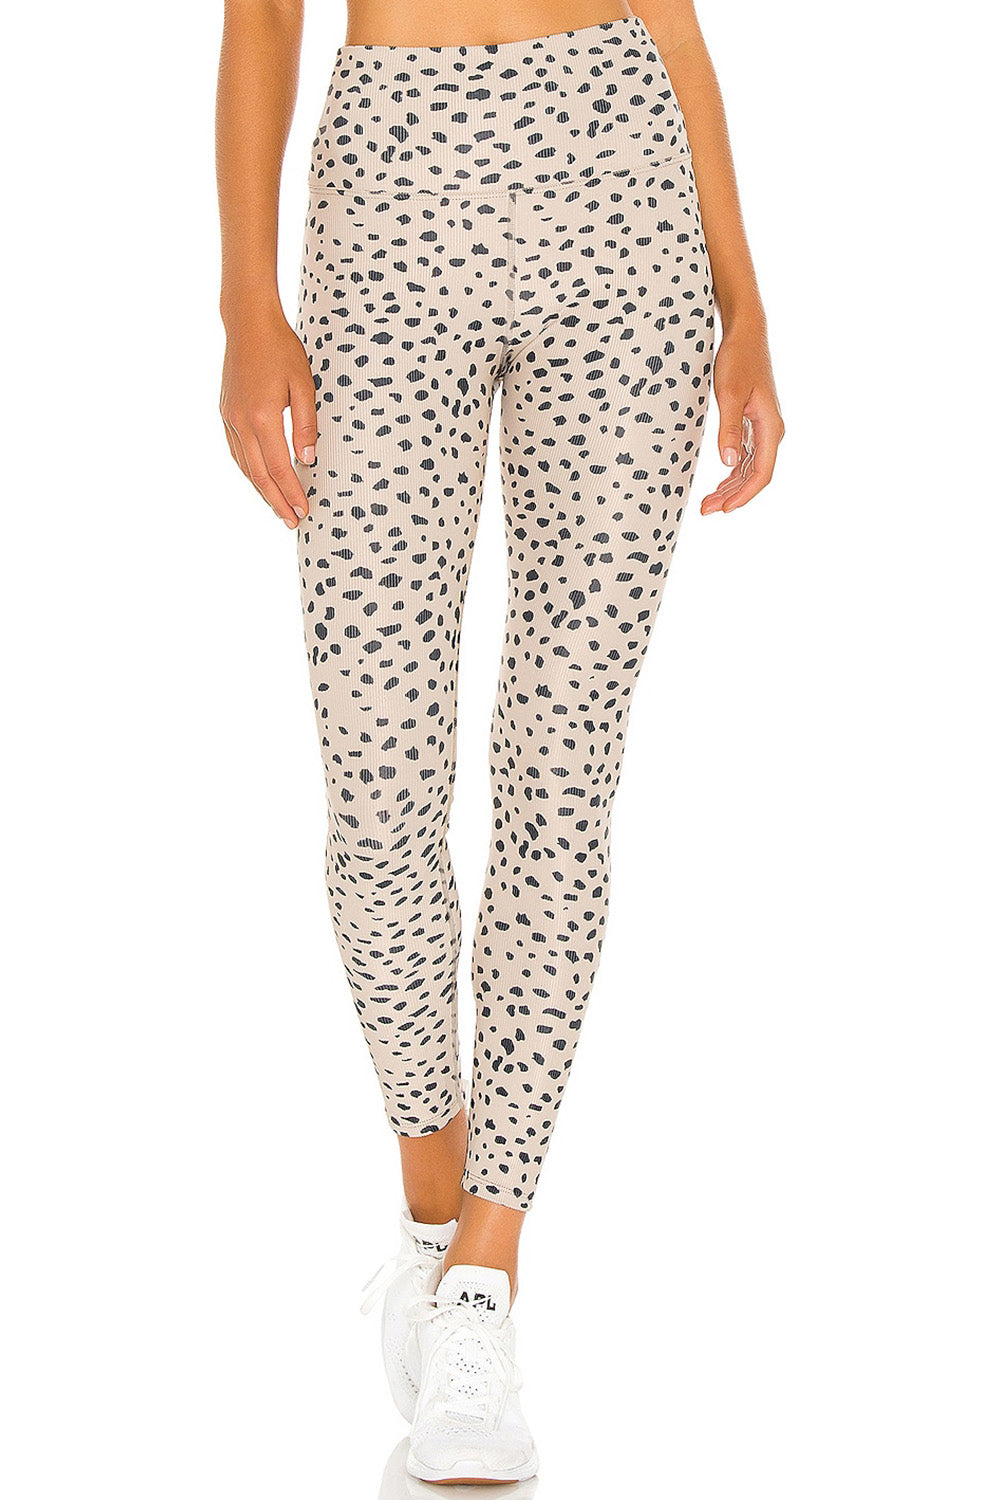 Dalmatian Spots Printed Stretchy High Waist Leggings